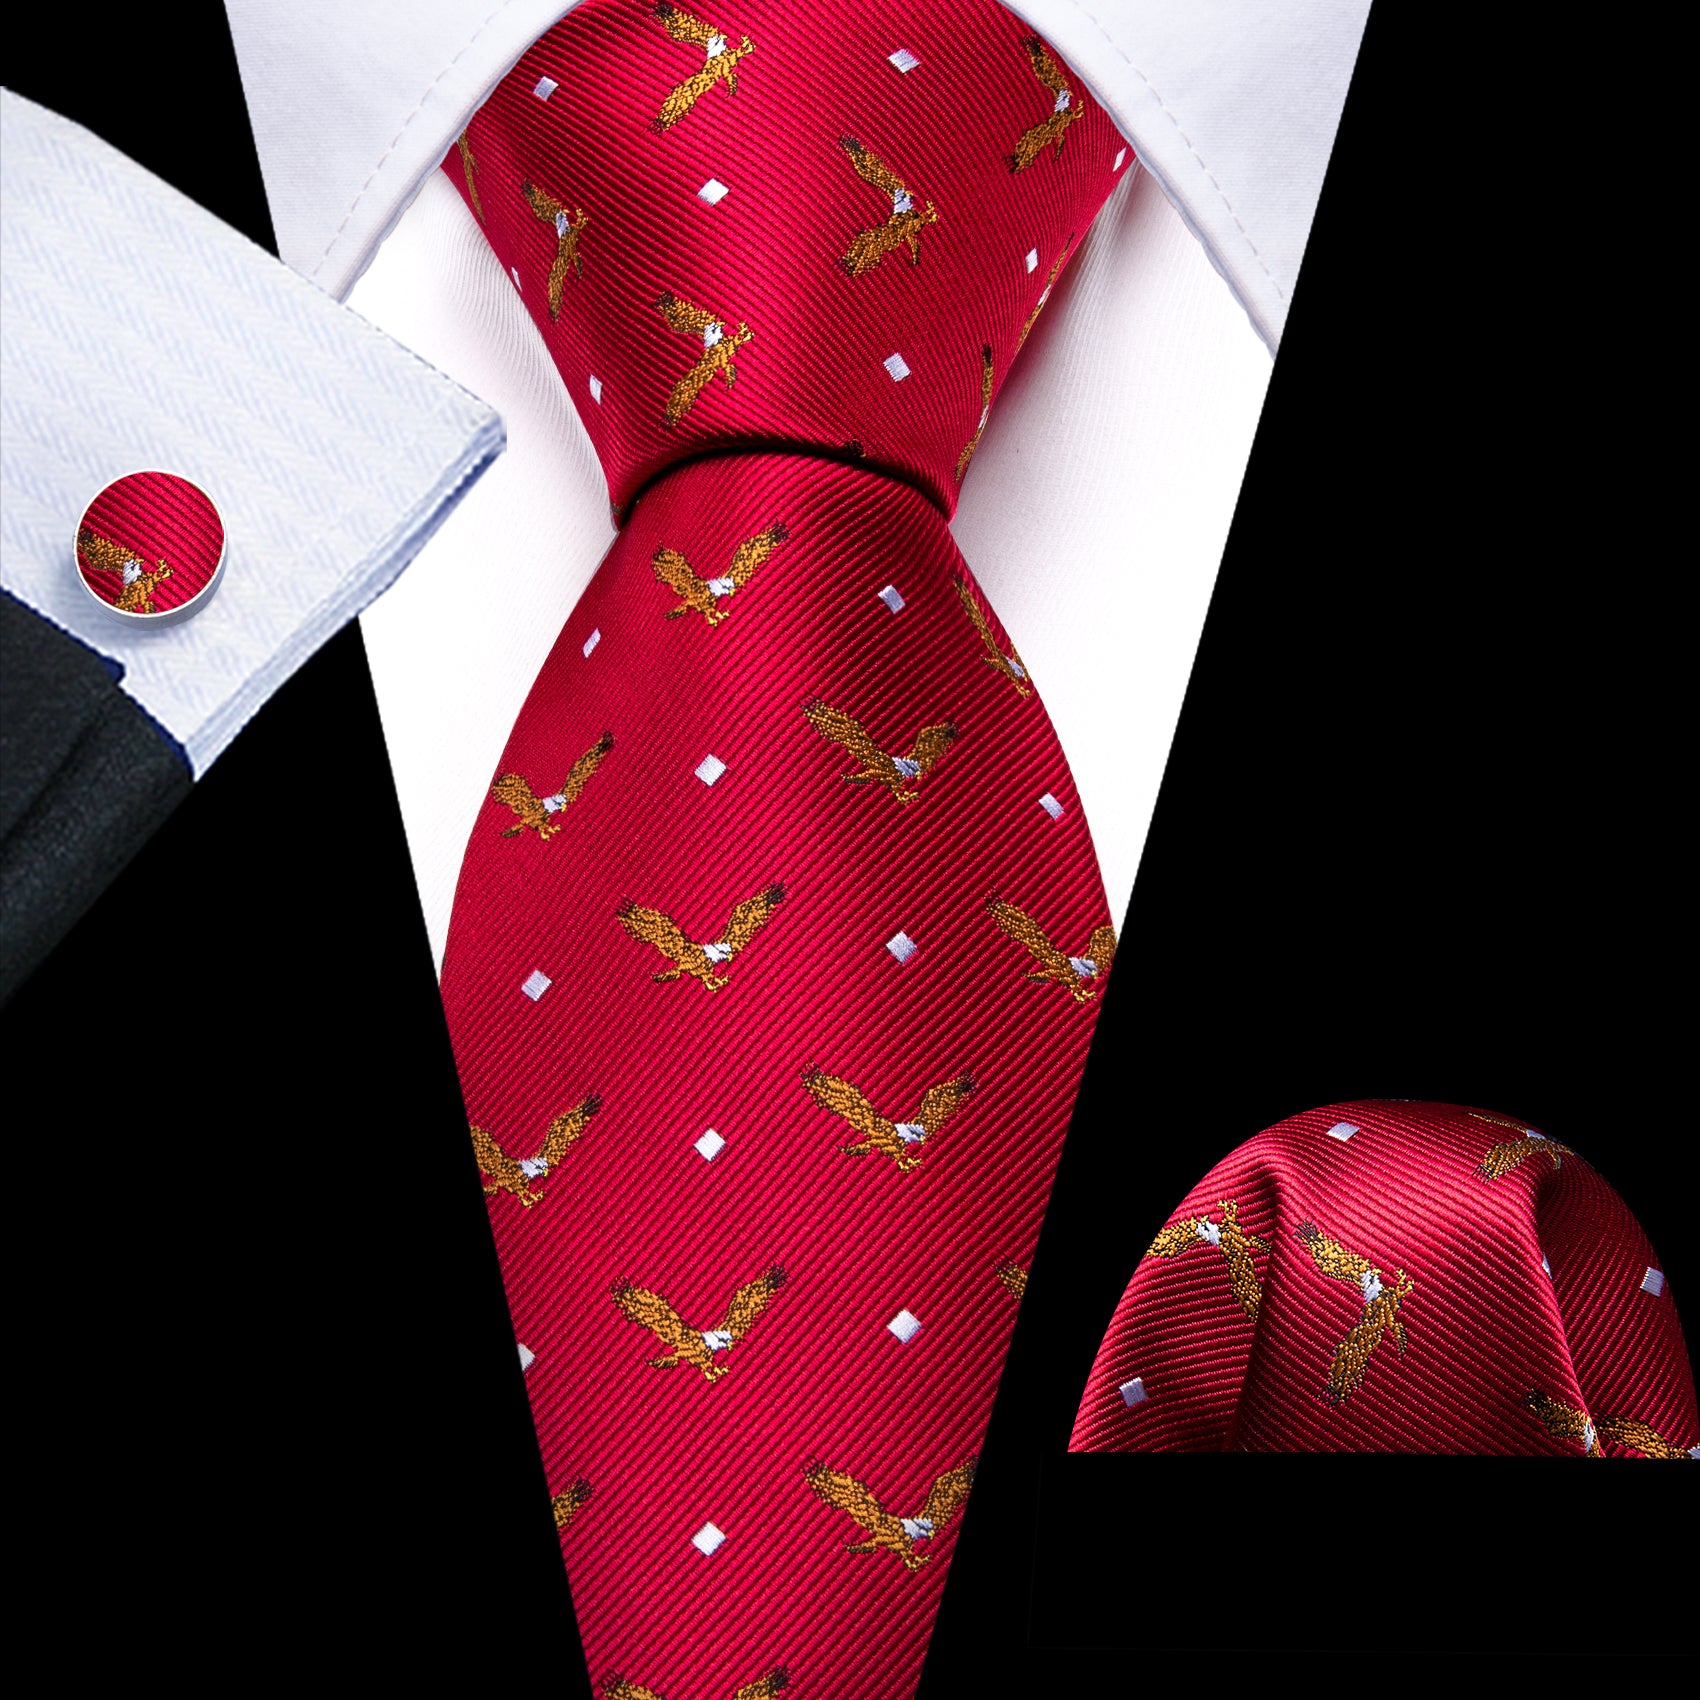 Red Brown Eagle Silk Tie Pocket Square Cufflinks Set